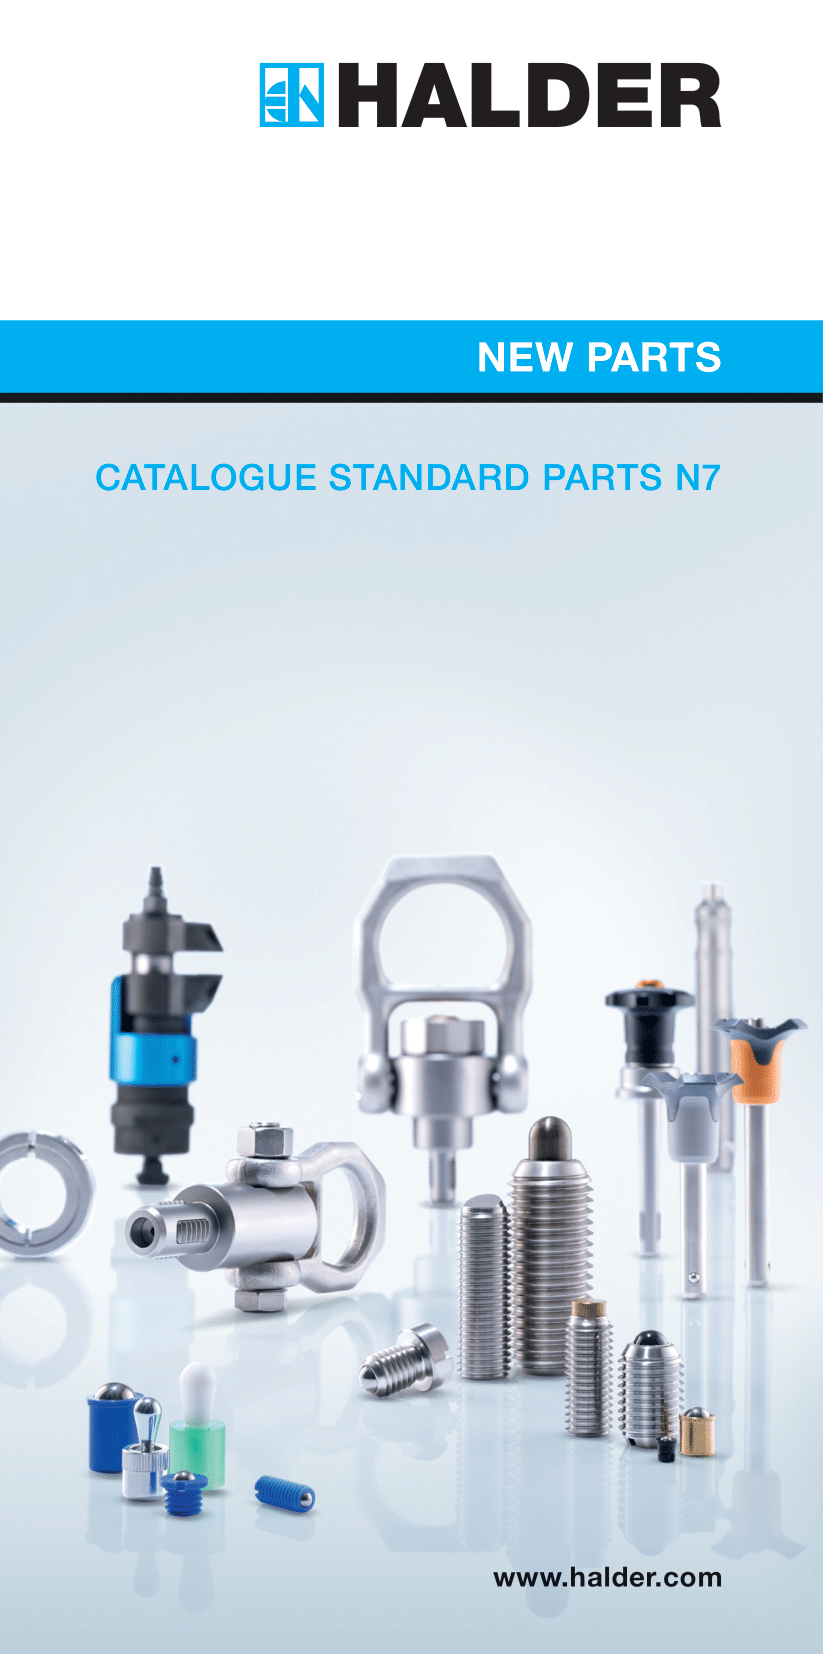 Flyer_New-Parts_Catalogue-standard-parts-N7_EN(2)-1-1